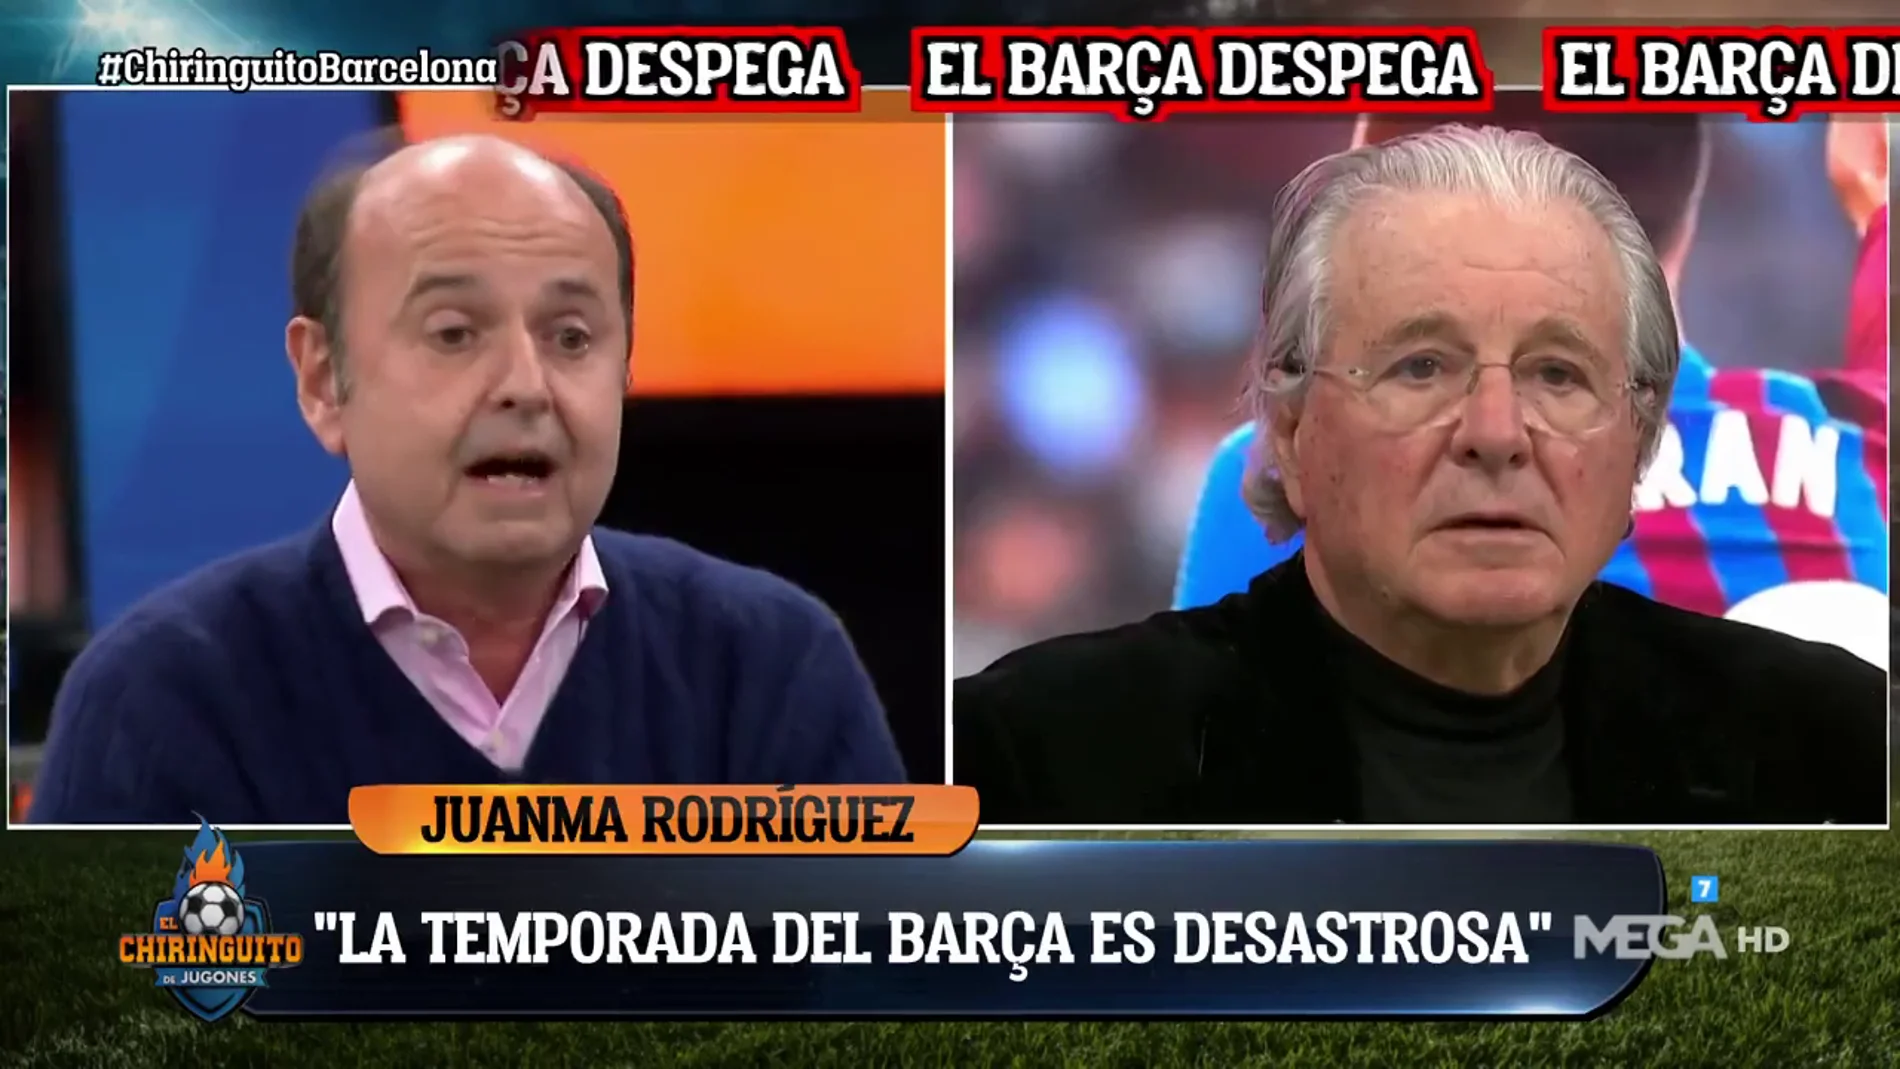  Juanma Rodríguez: "La temporada del Barça es desastrosa"